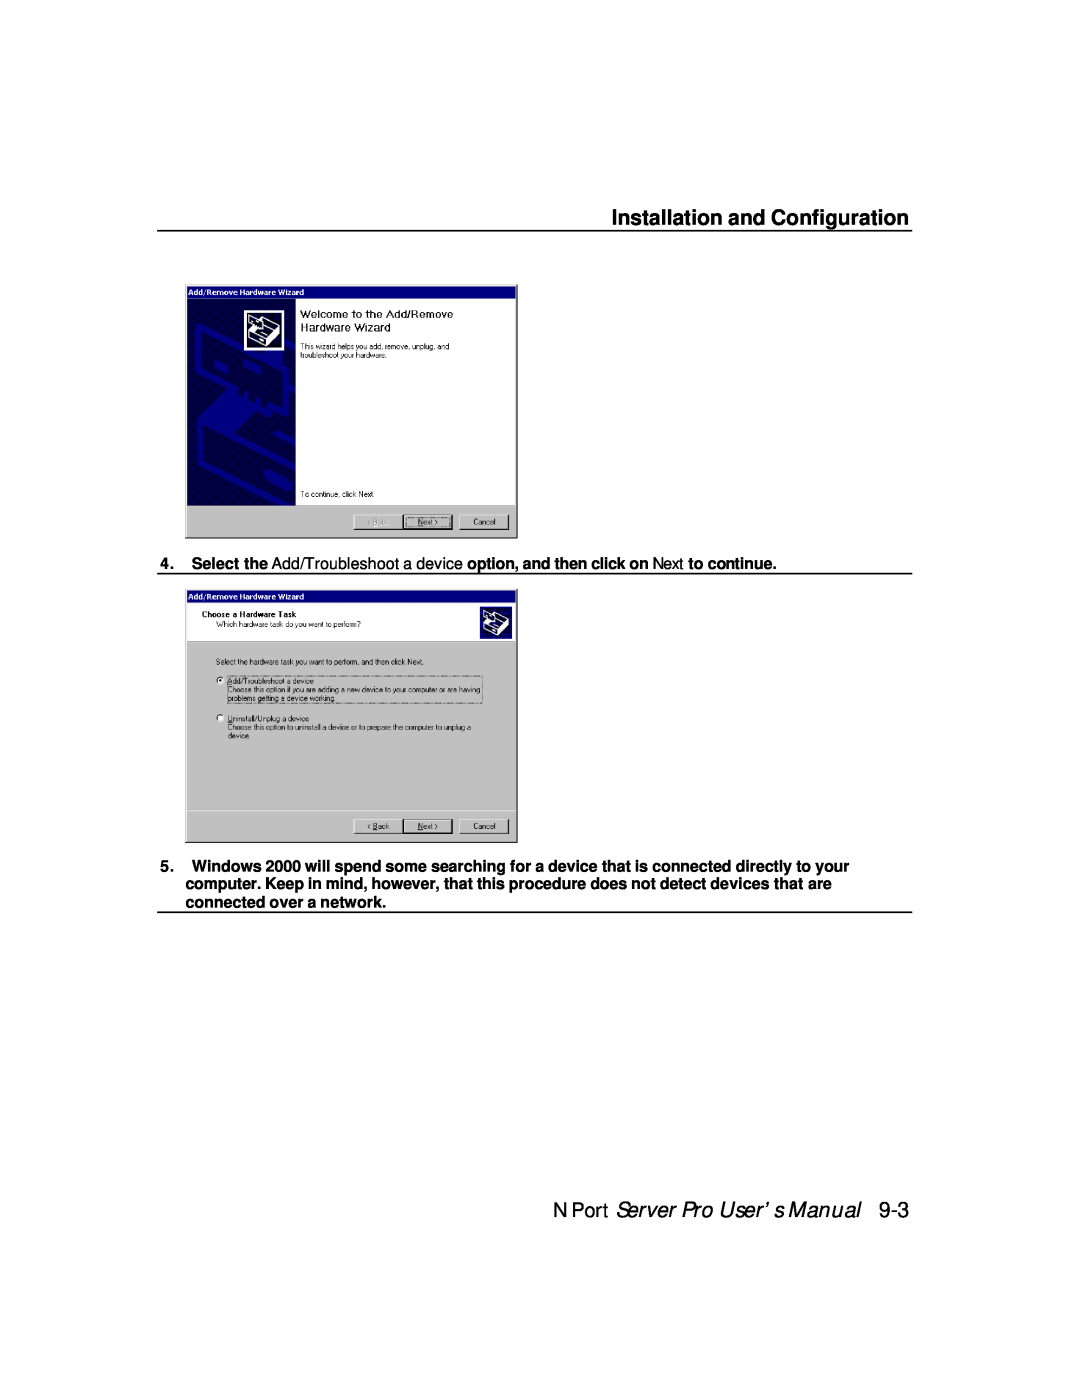 Moxa Technologies DE-308, DE-303 manual Installation and Configuration, NPort Server Pro User’s Manual 